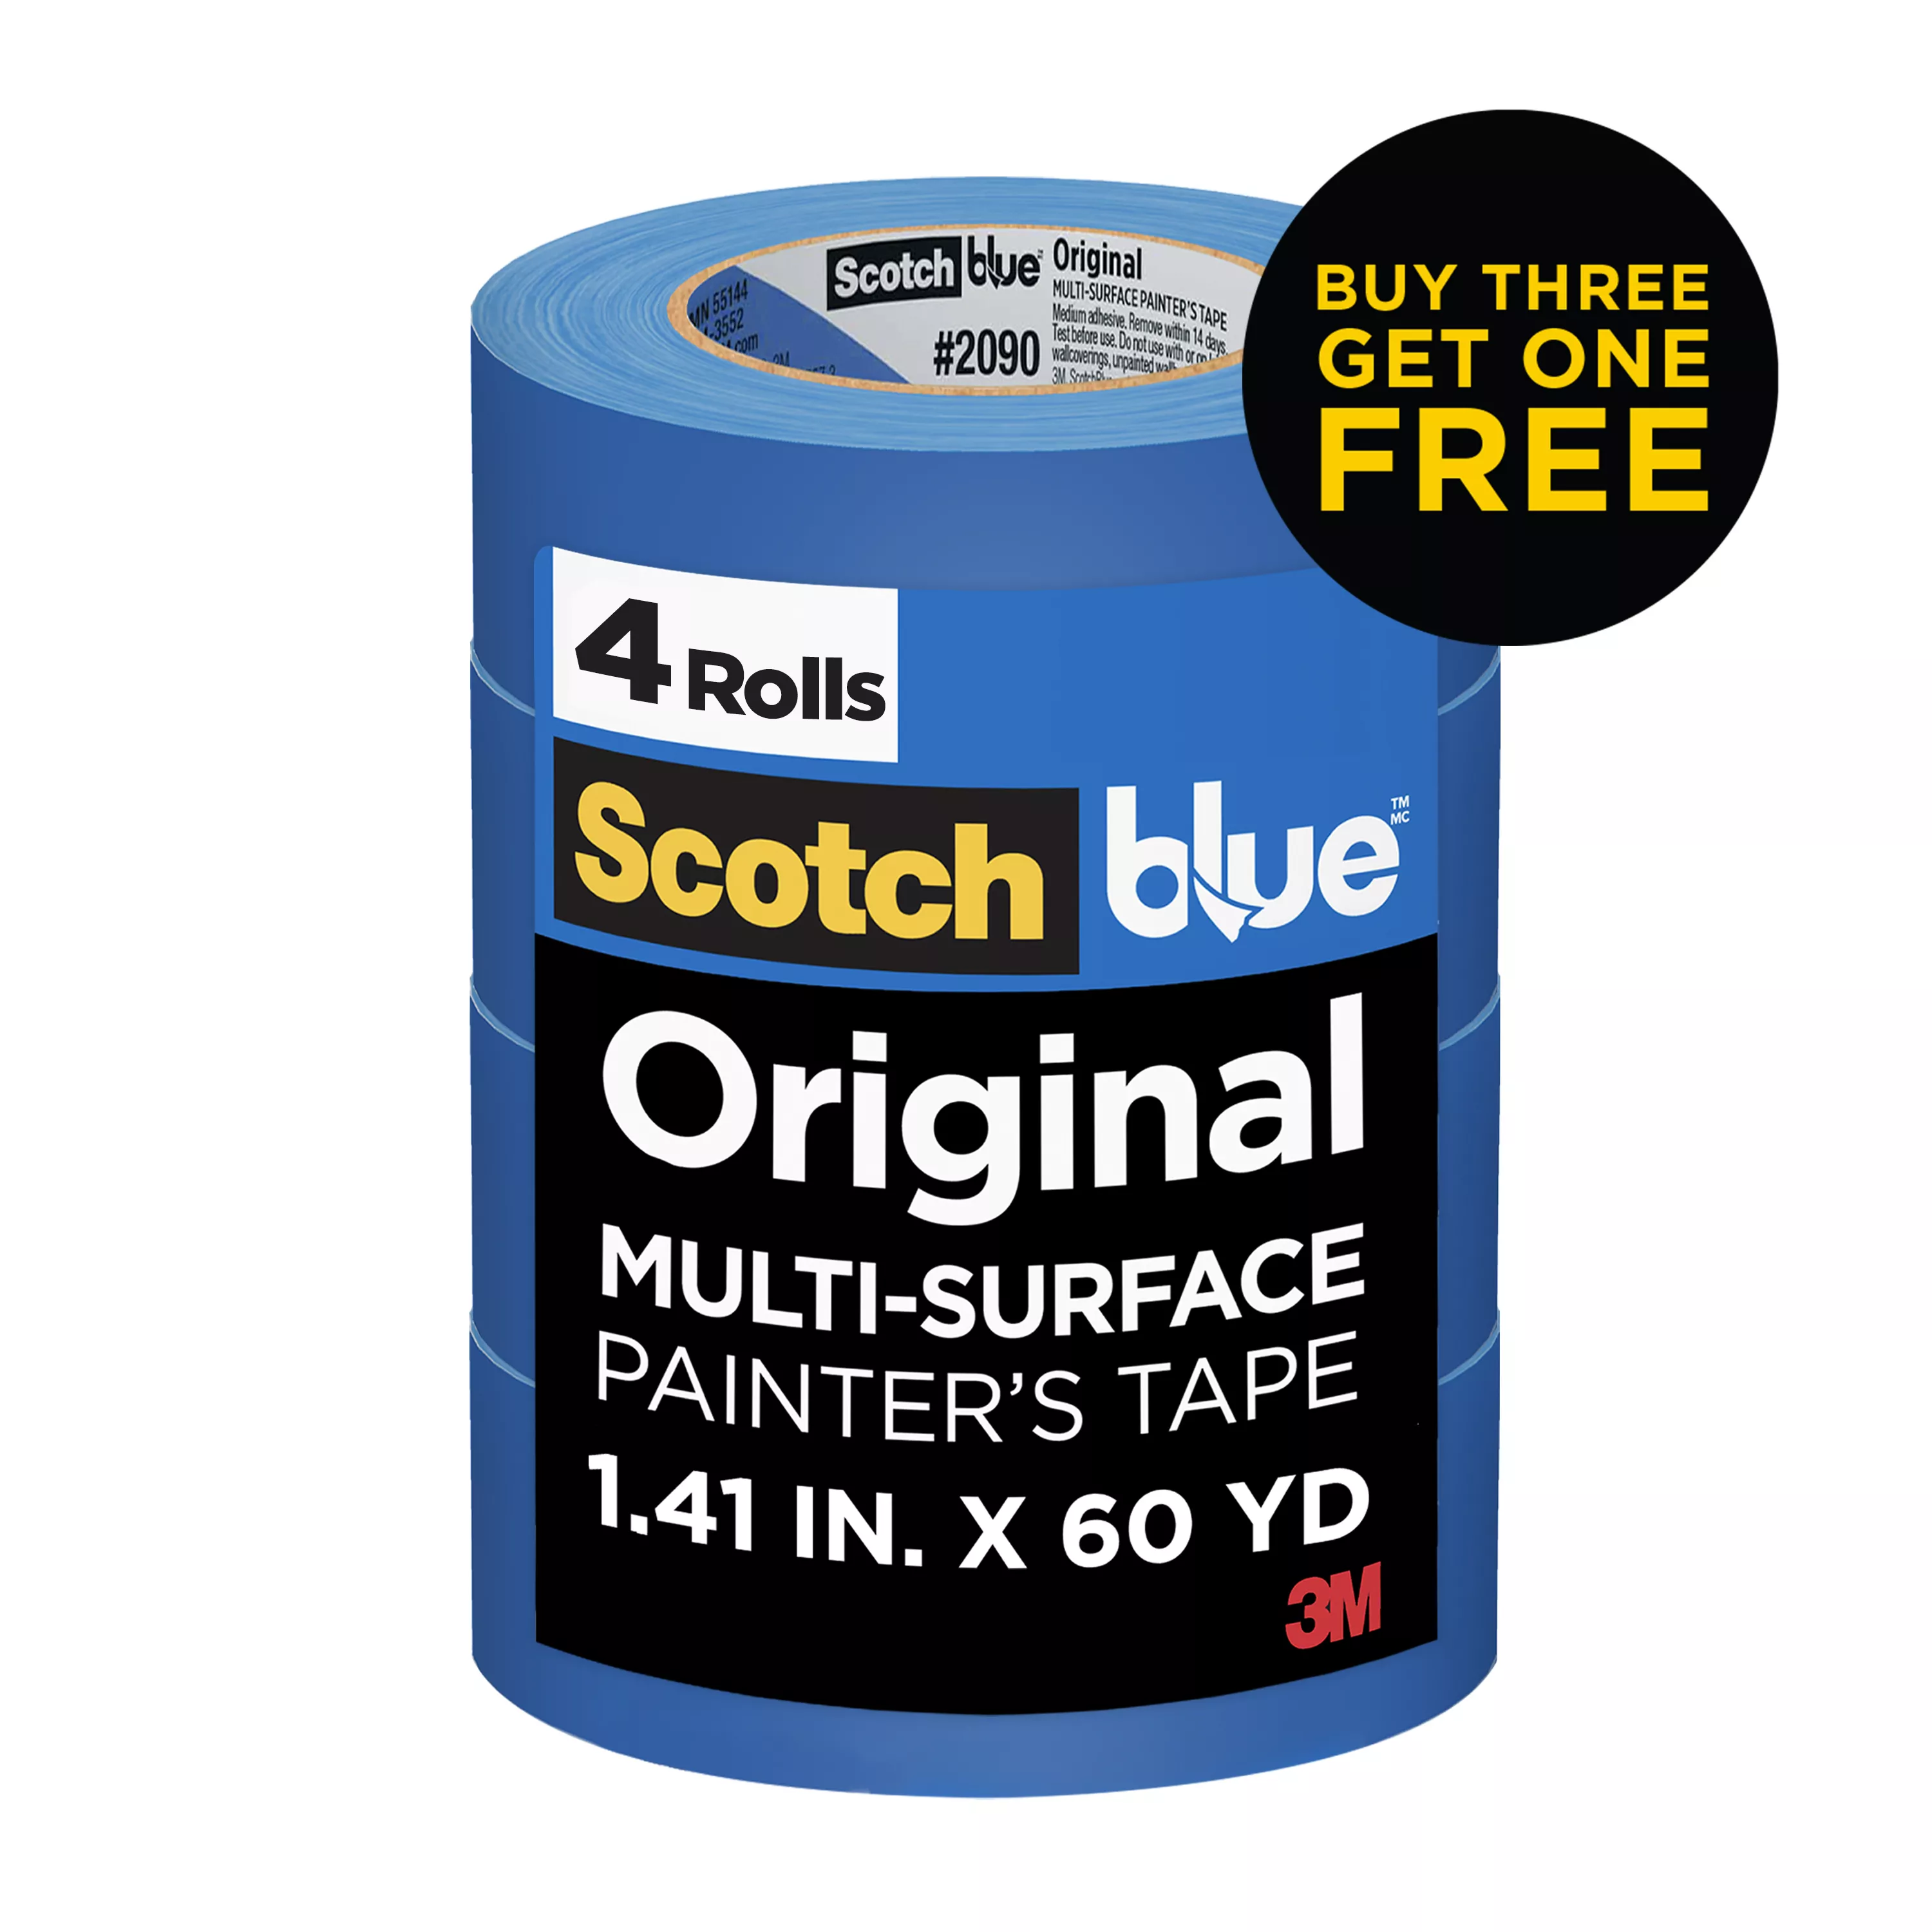 ScotchBlue™ Original Painter's Tape 2090-36NC4-P, 1.41 In X 60 Yd (36mm
X 54,8M), 4 Rolls/Pack, Buy Three Get One Free